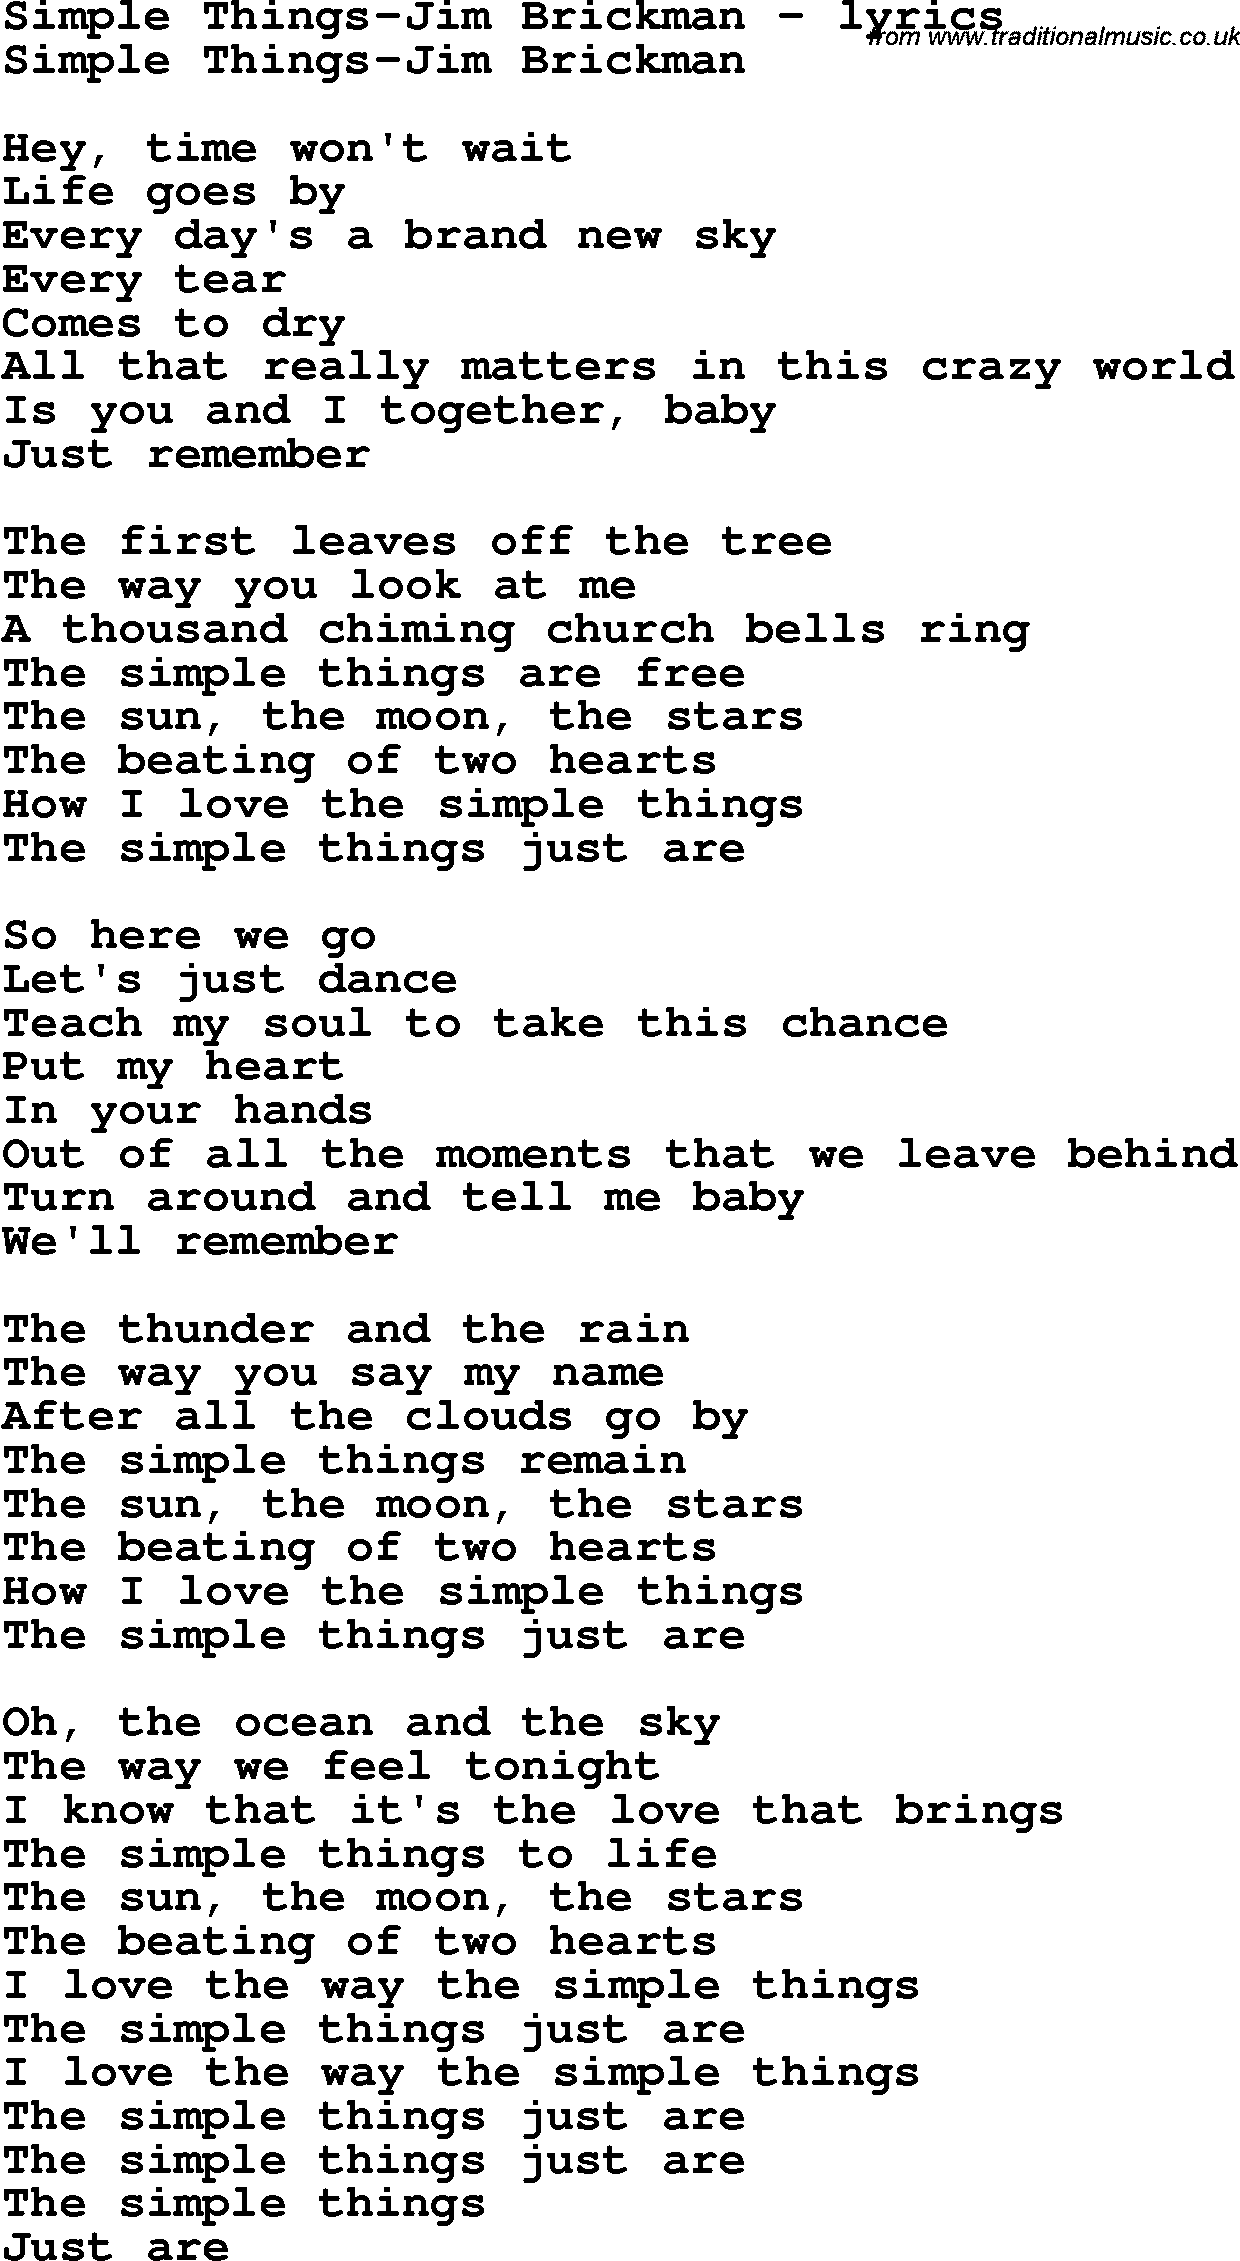 Love Song Lyrics for: Simple Things-Jim Brickman